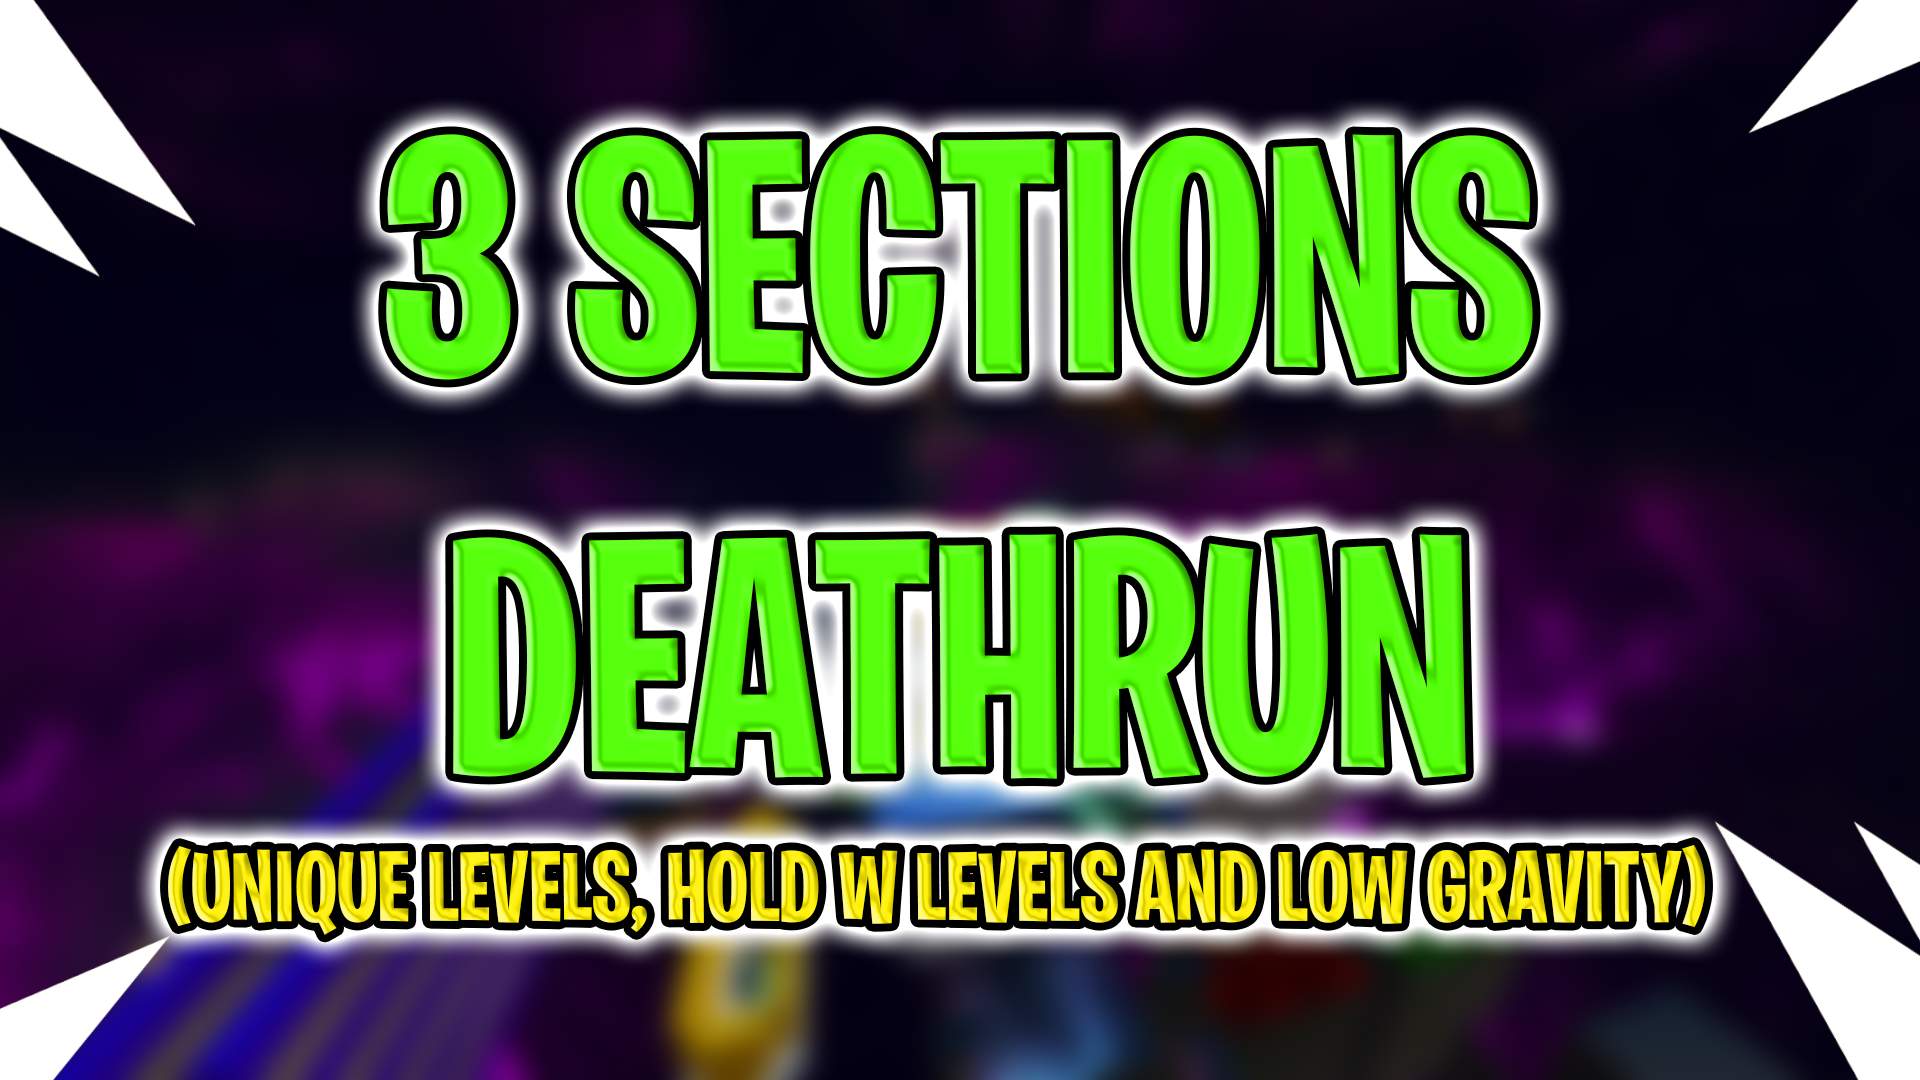 3 SECTIONS DEATHRUN